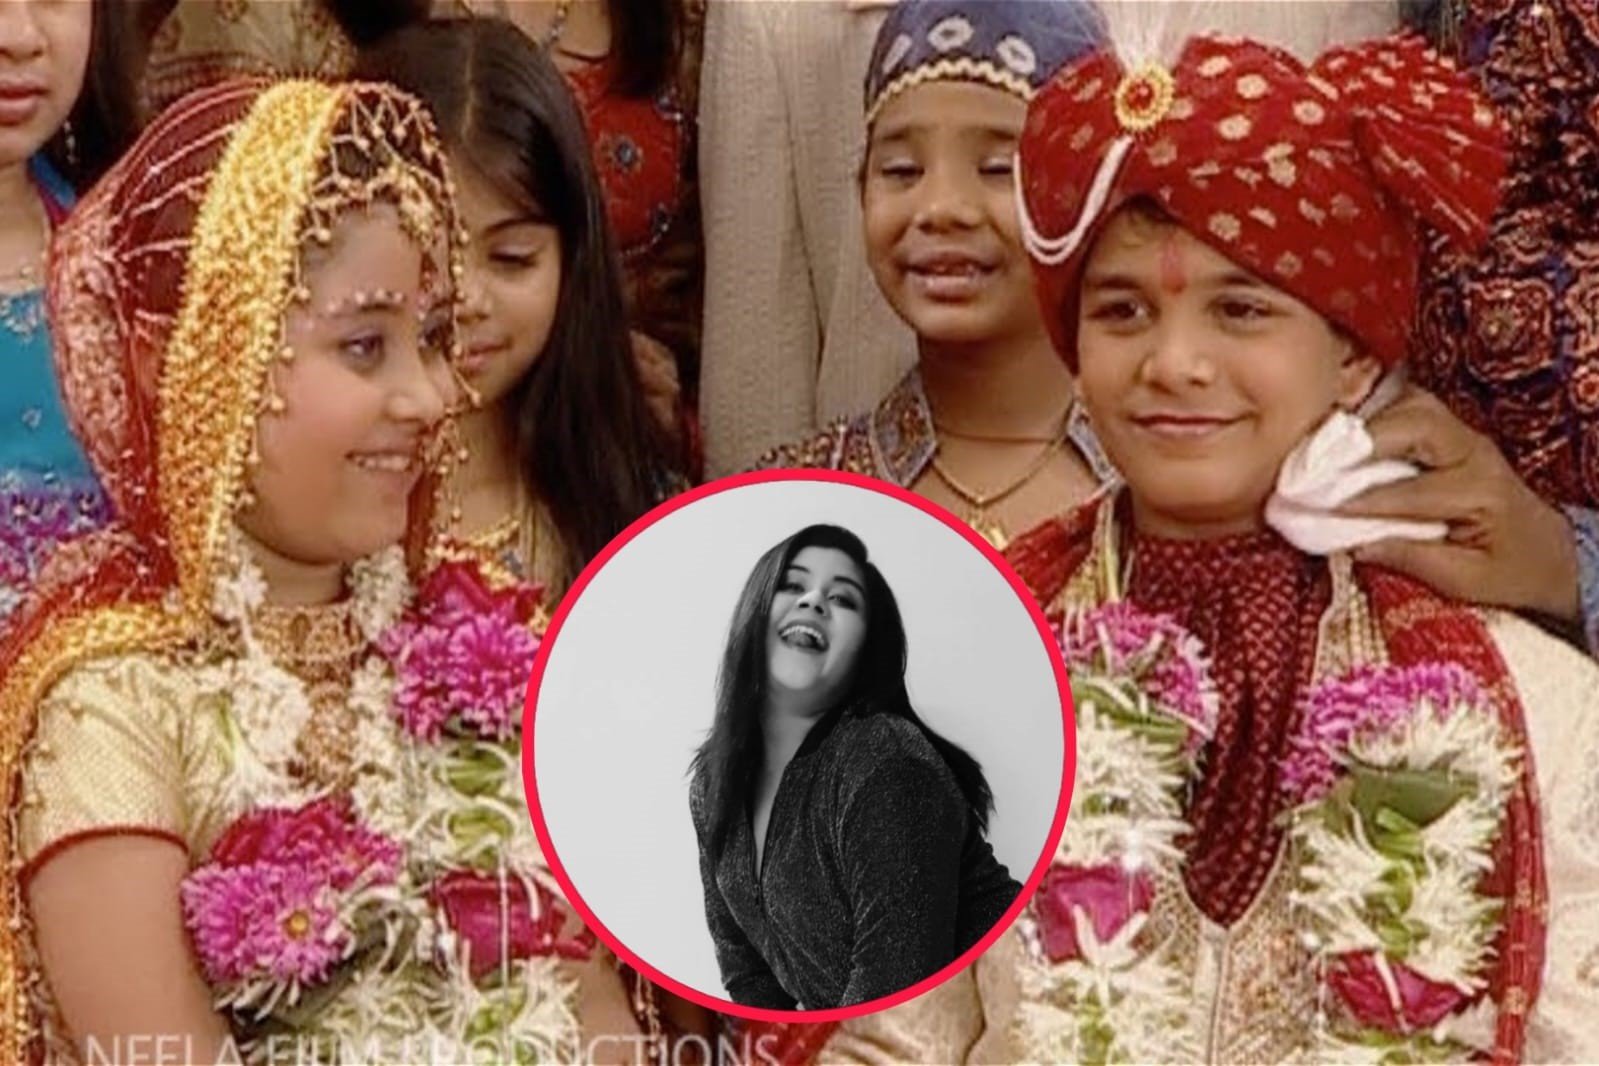 Taarak Mehta Ka Ooltah Chashmah - Tappu's wife's complete look changed